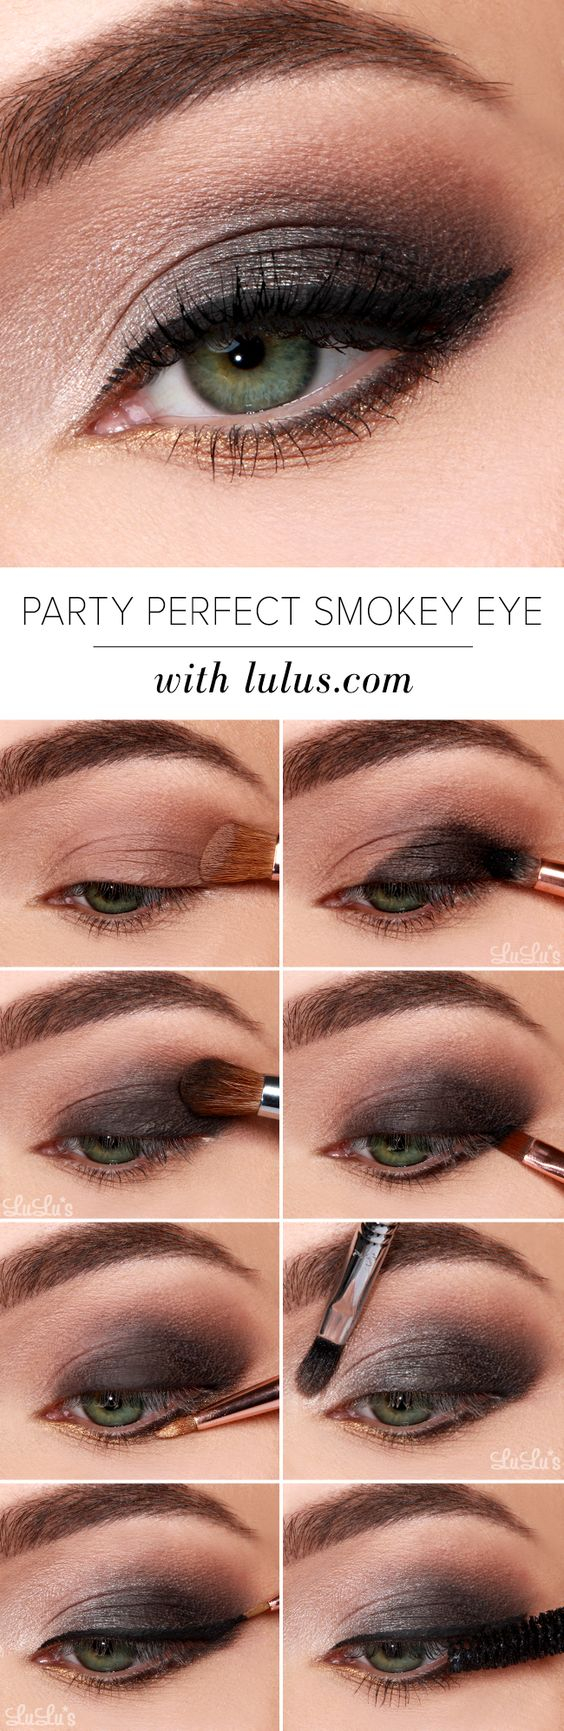 Black Smokey Eye Makeup 40 Hottest Smokey Eye Makeup Ideas 2019 Smokey Eye Tutorials For